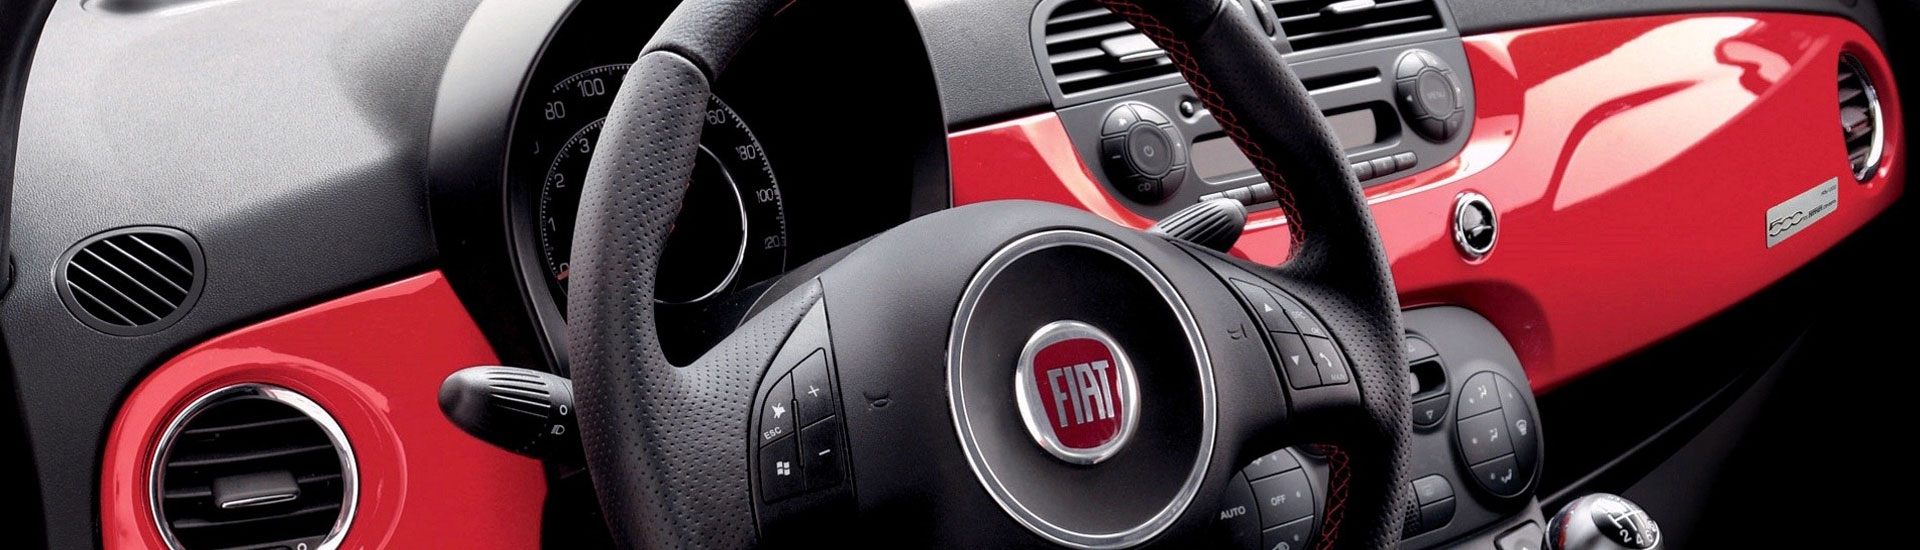 2013 Fiat 500 Abarth Custom Dash Kits